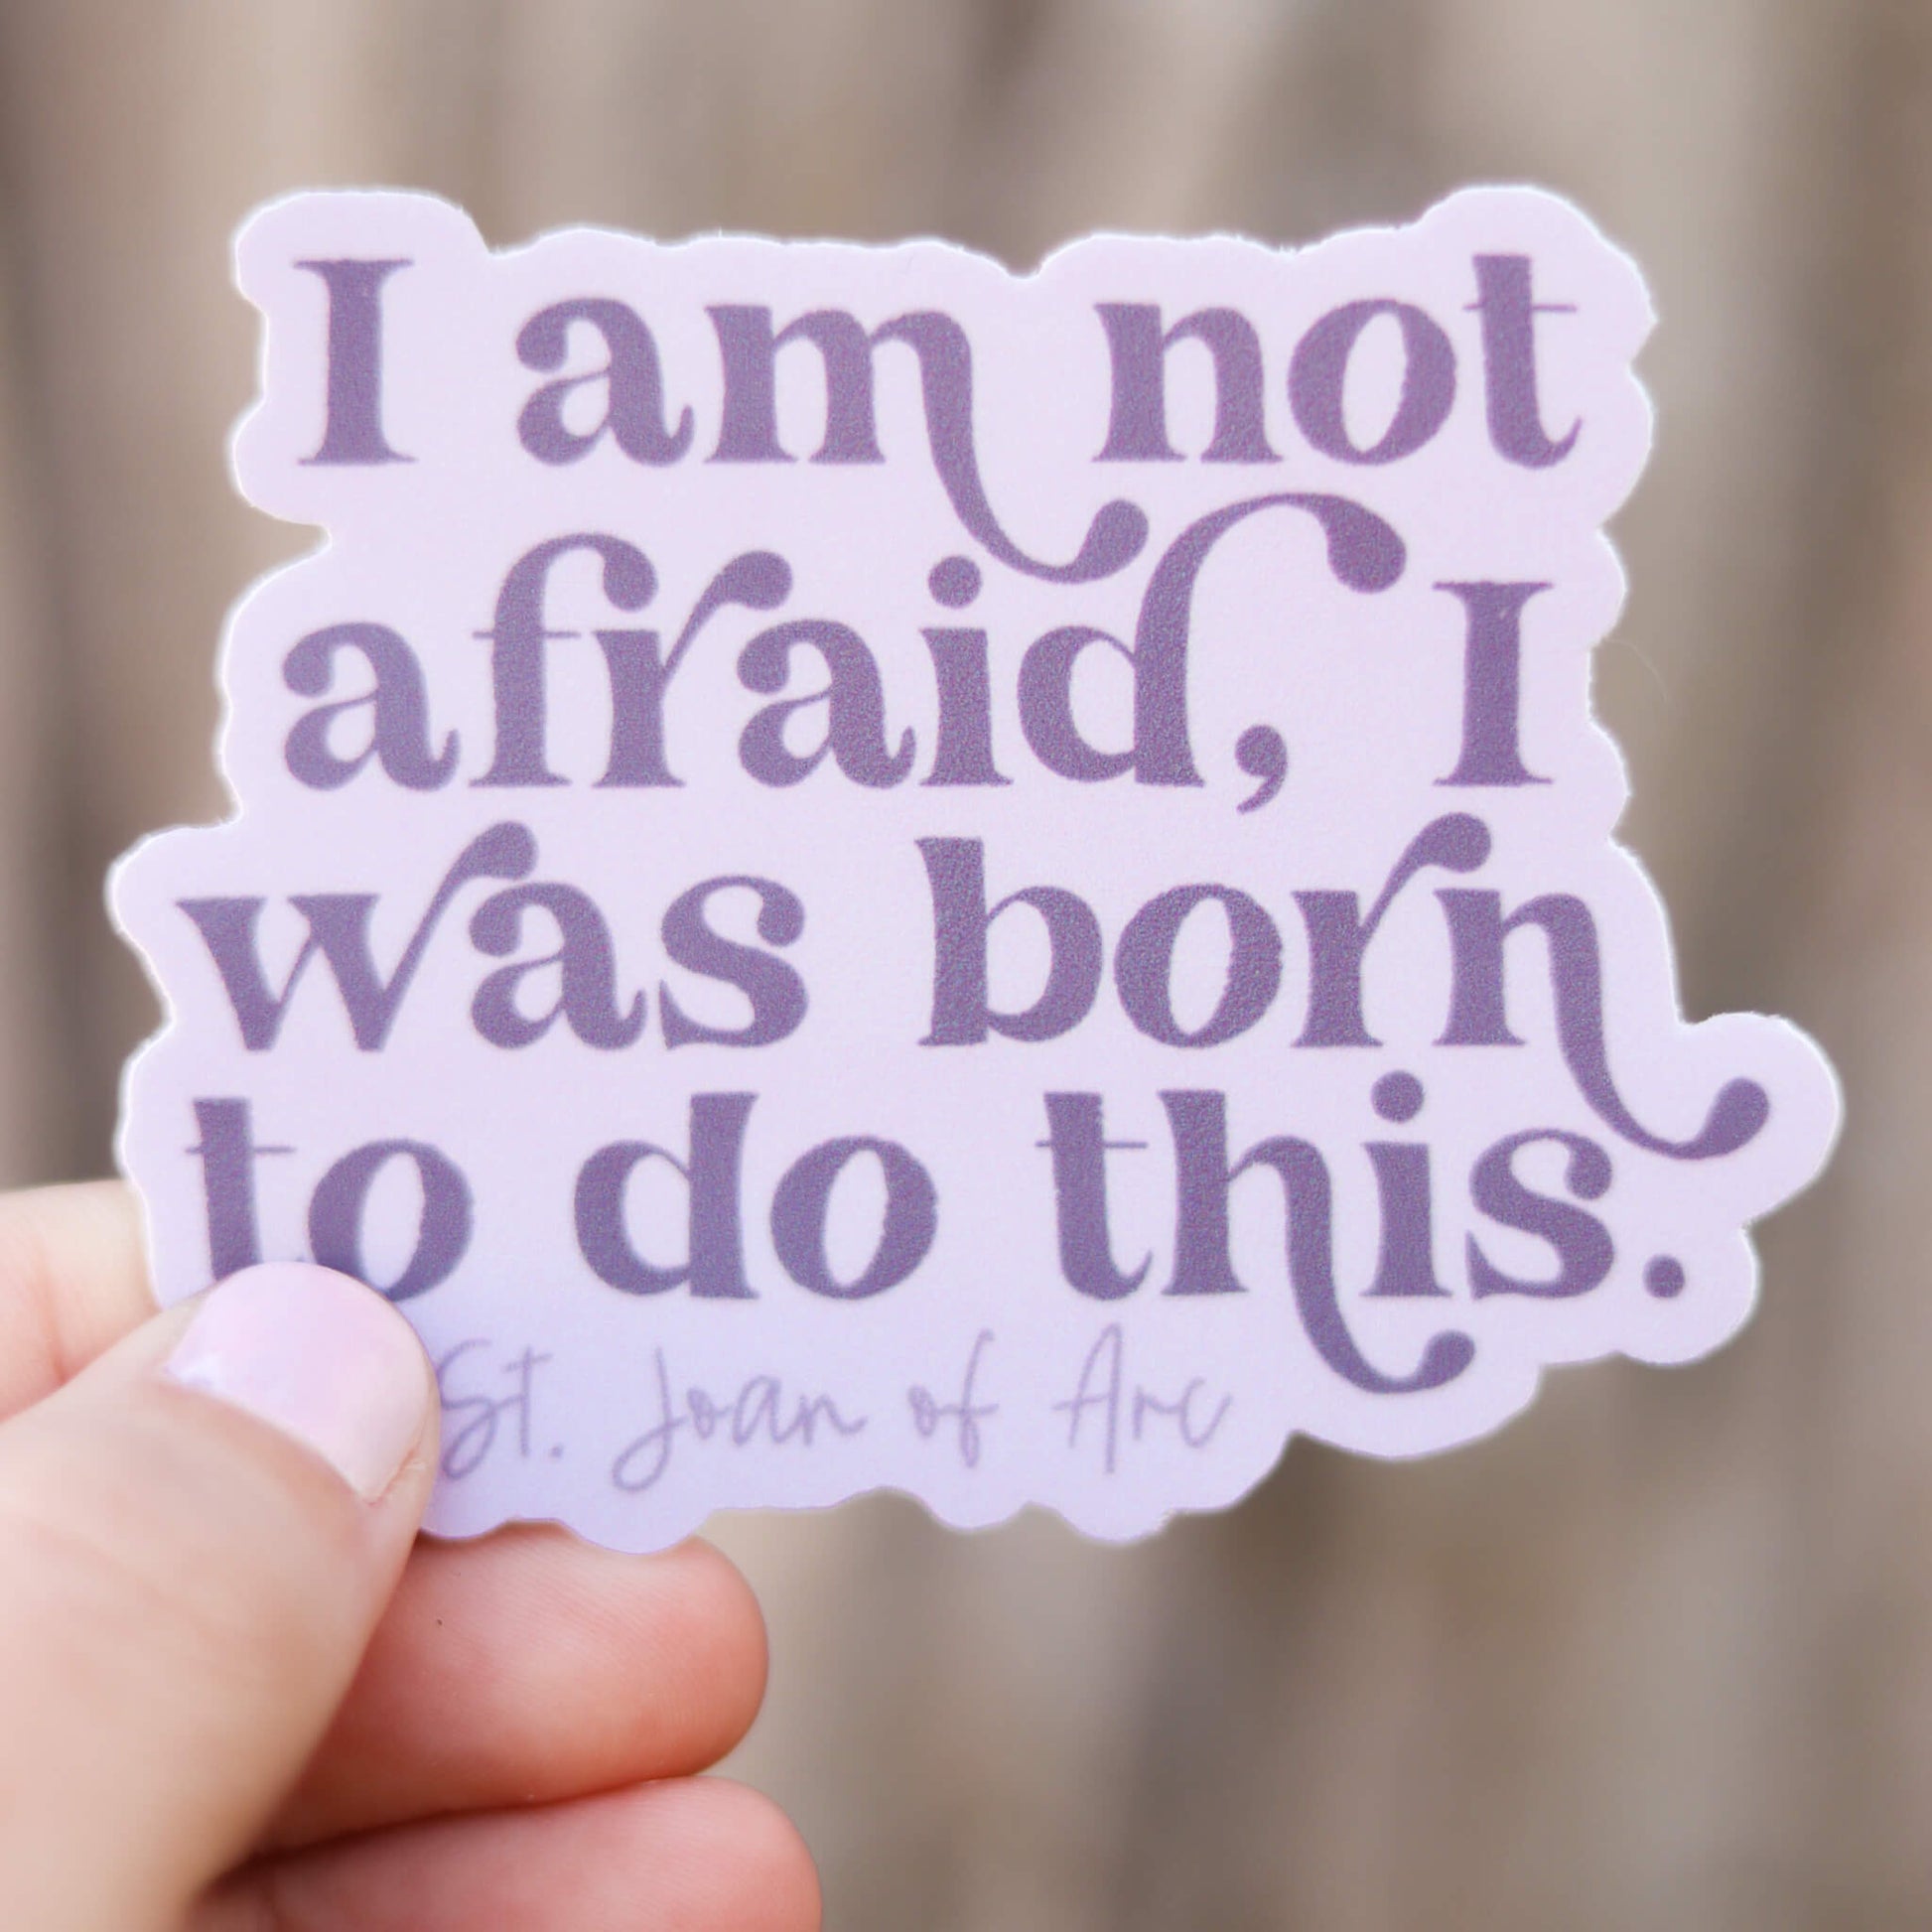 I am not afraid- St. Joan of Arc sticker